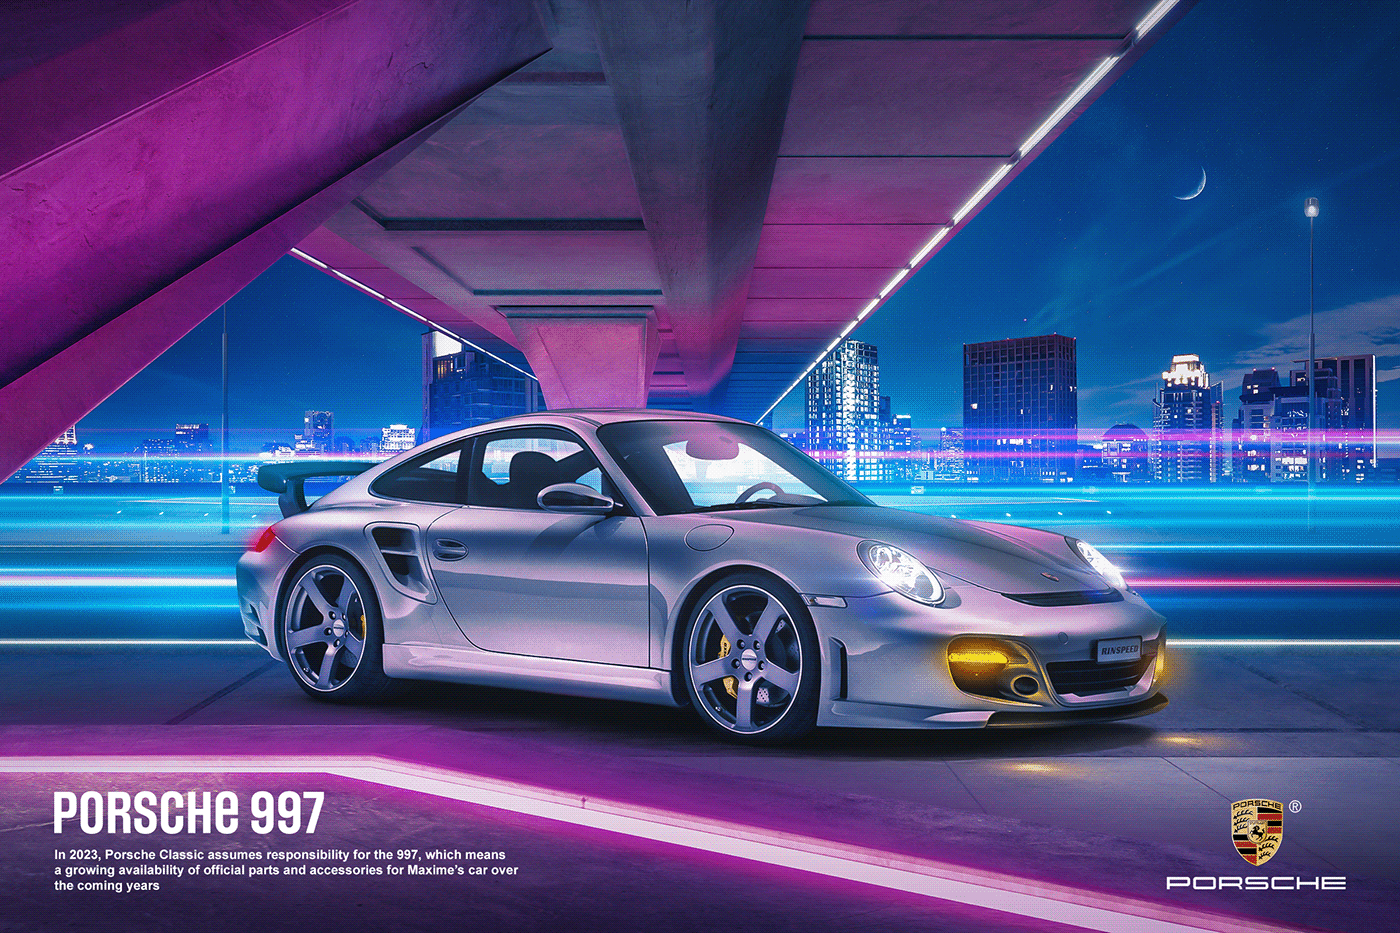 ads automotive   car advertising Digital Art  manipulation Photography  Porsche Post Production retouch visualization